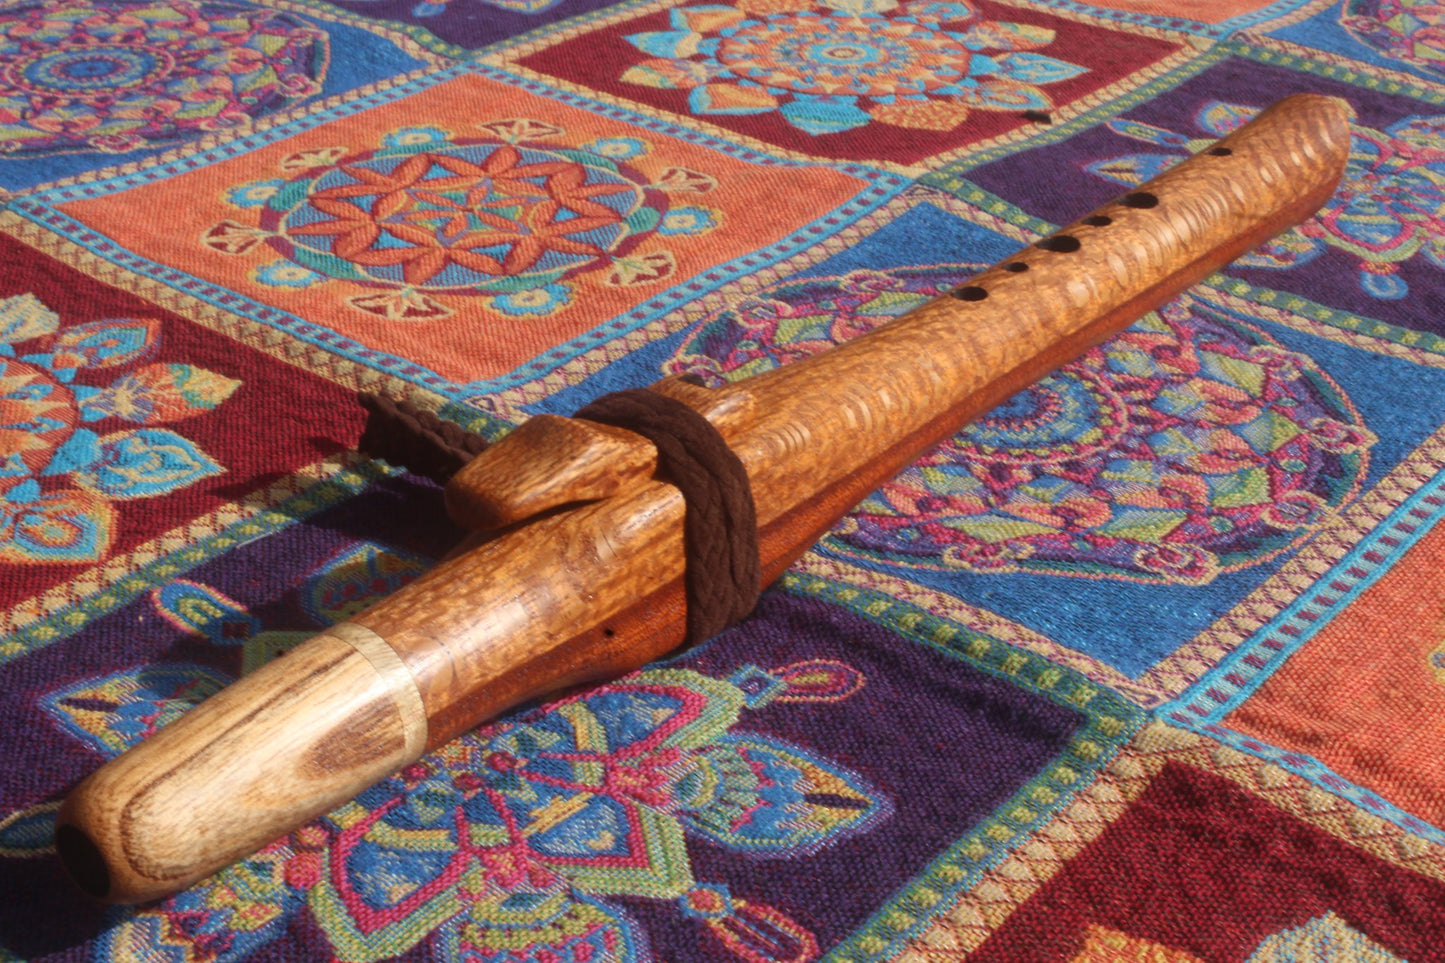 High C# Arabic scale flute 528Hz